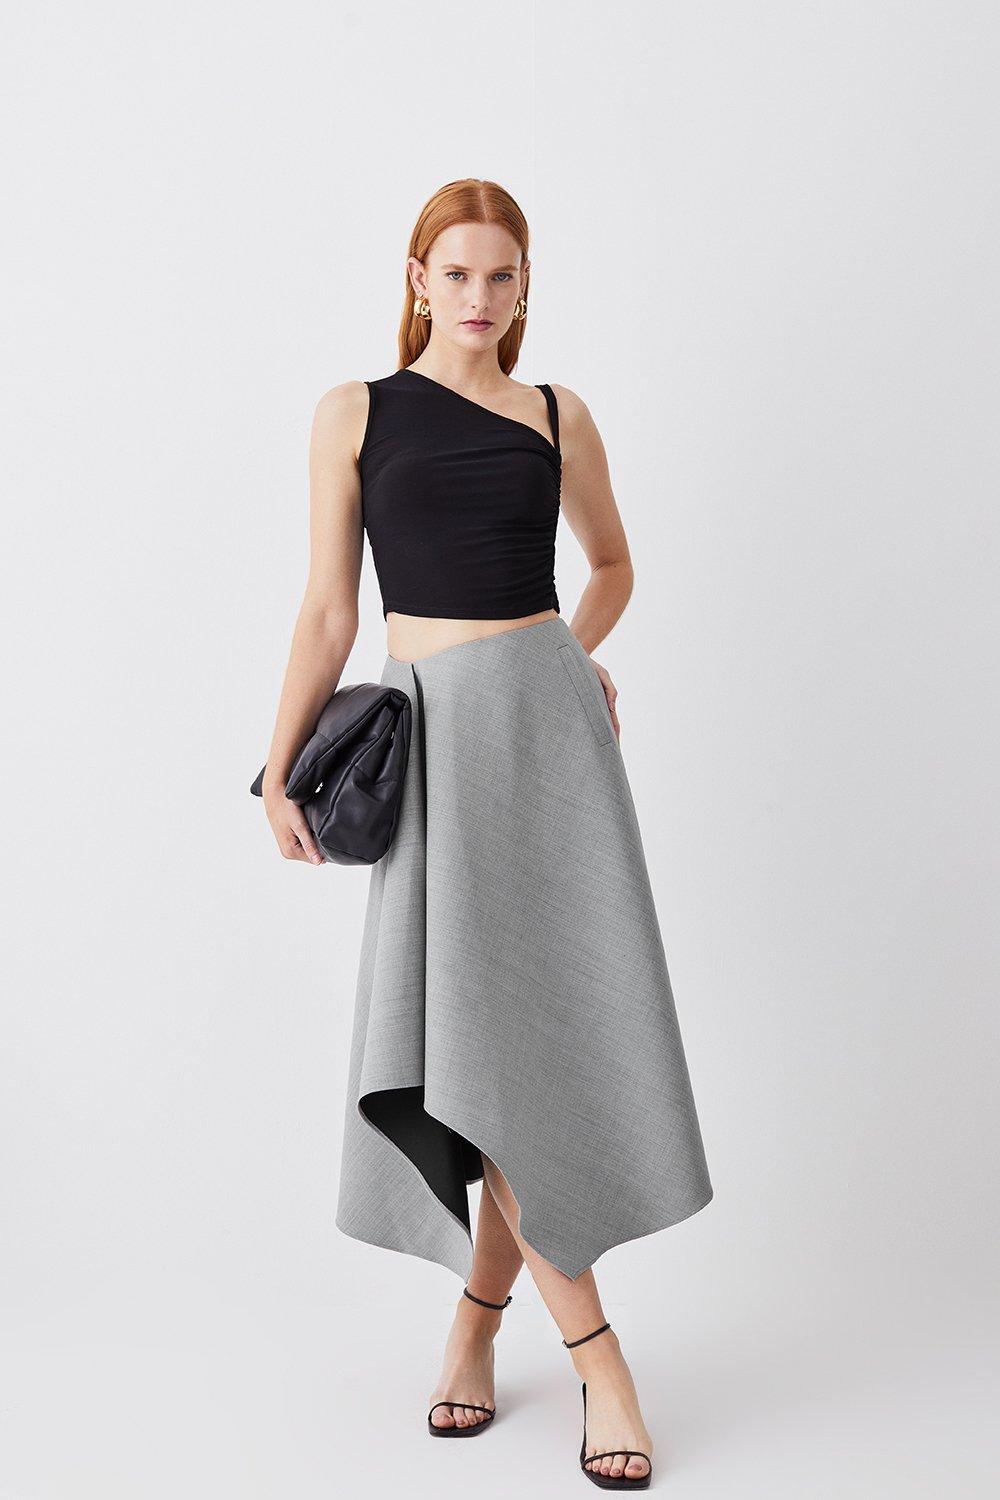 Skirts | Skirts For Women | Karen Millen